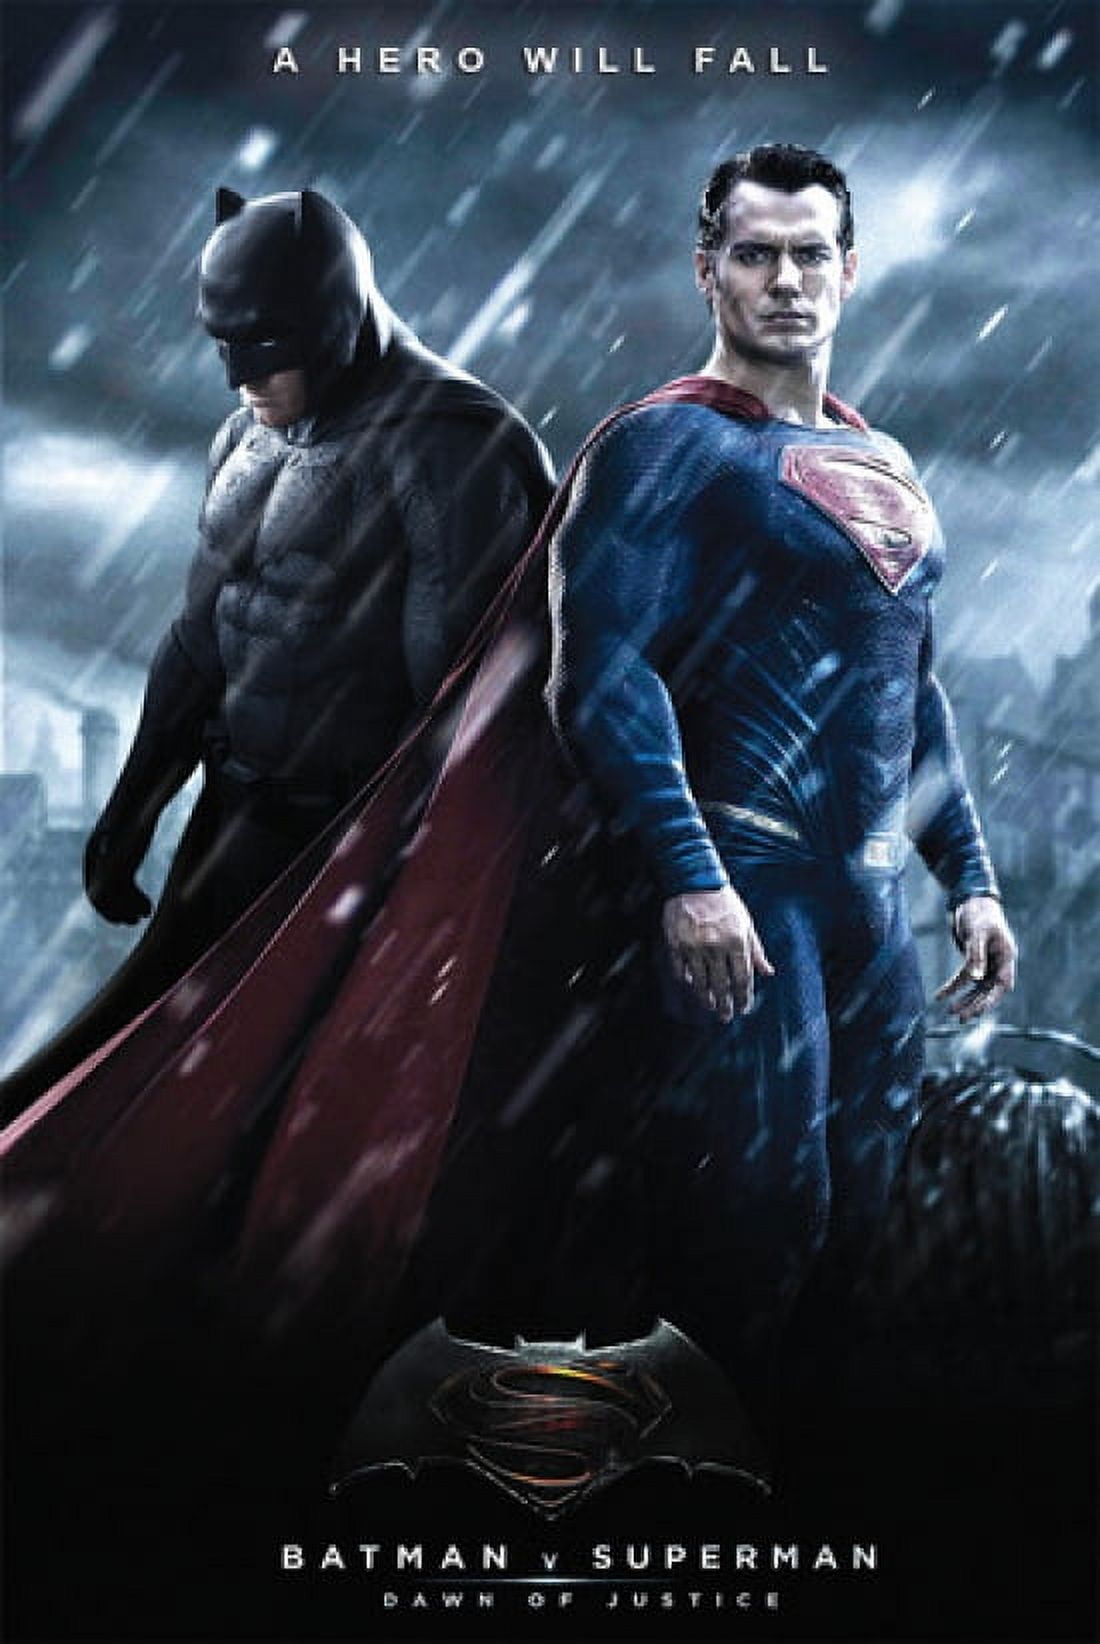 Batman v Superman Movie poster Movie Poster Poster (24 x 36) - Walmart.com